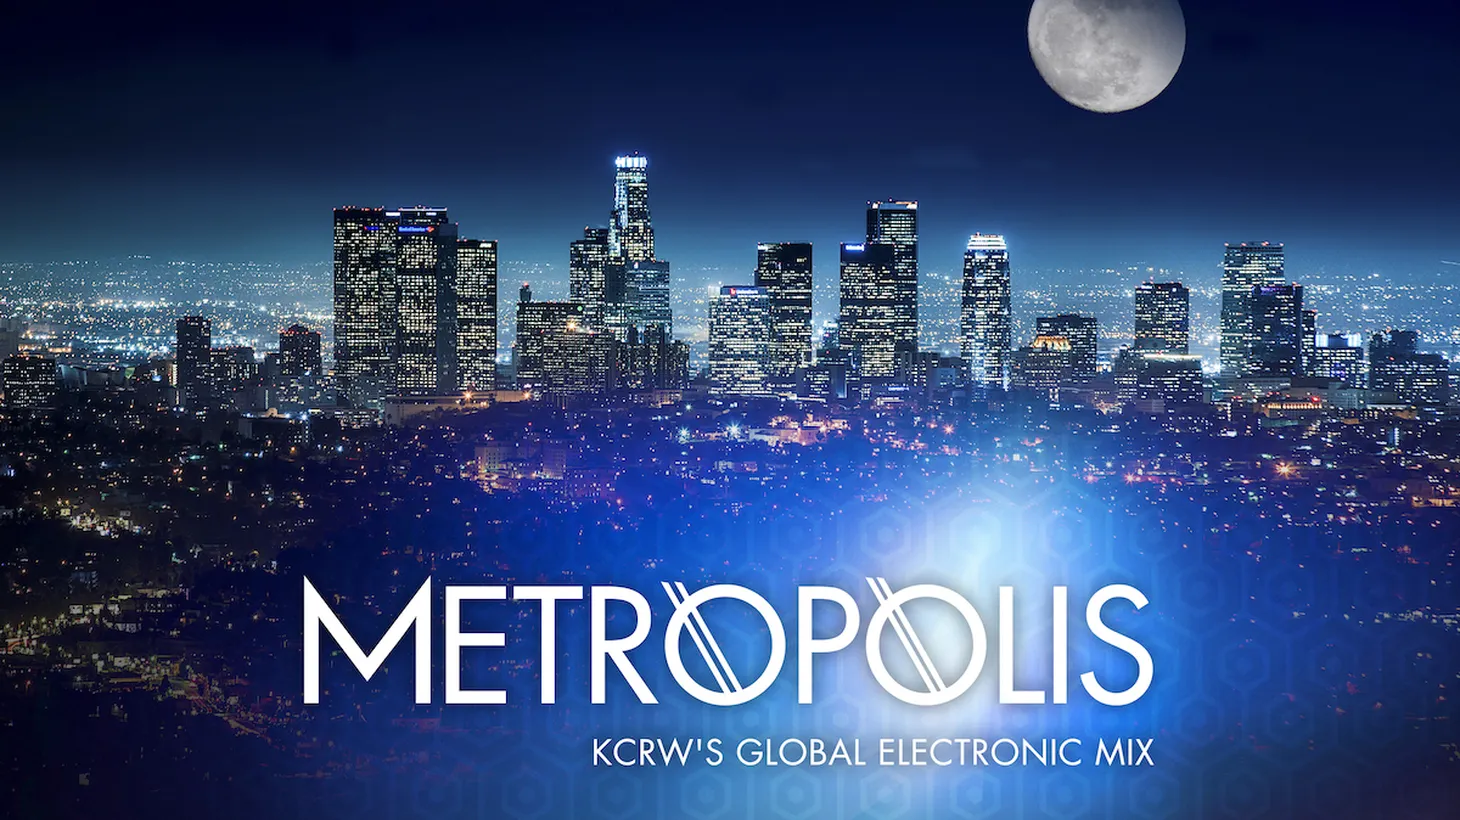 Metropolis playlist, January 29, 2022.